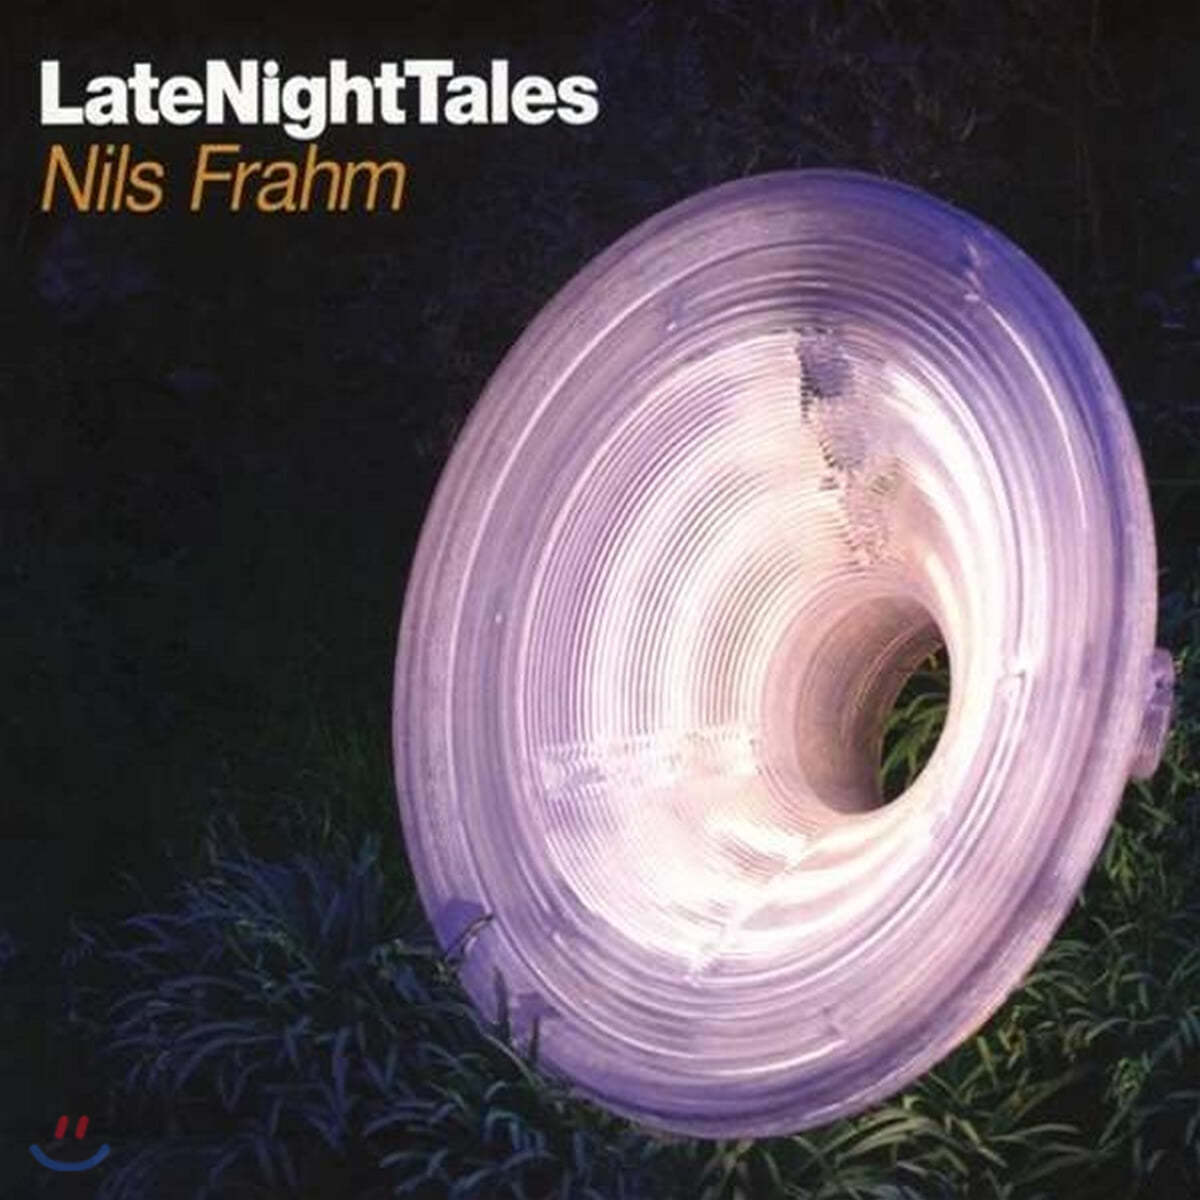 Nils Frahm (닐스 프람) - Late Night Tales: Nils Frahm